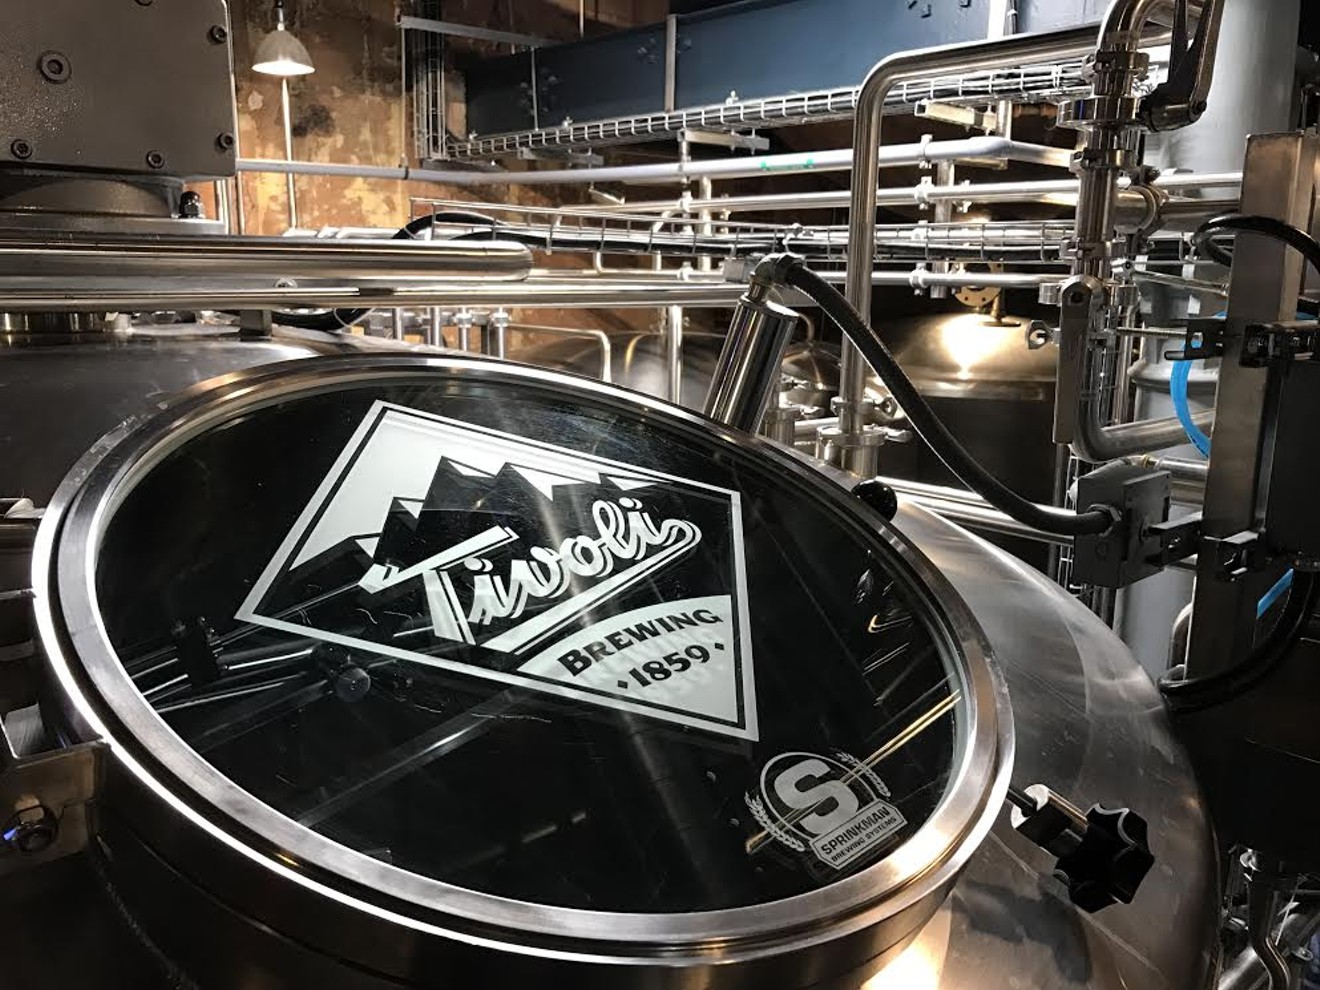 Tivoli Brewing has moved operations from Auraria to La Junta.